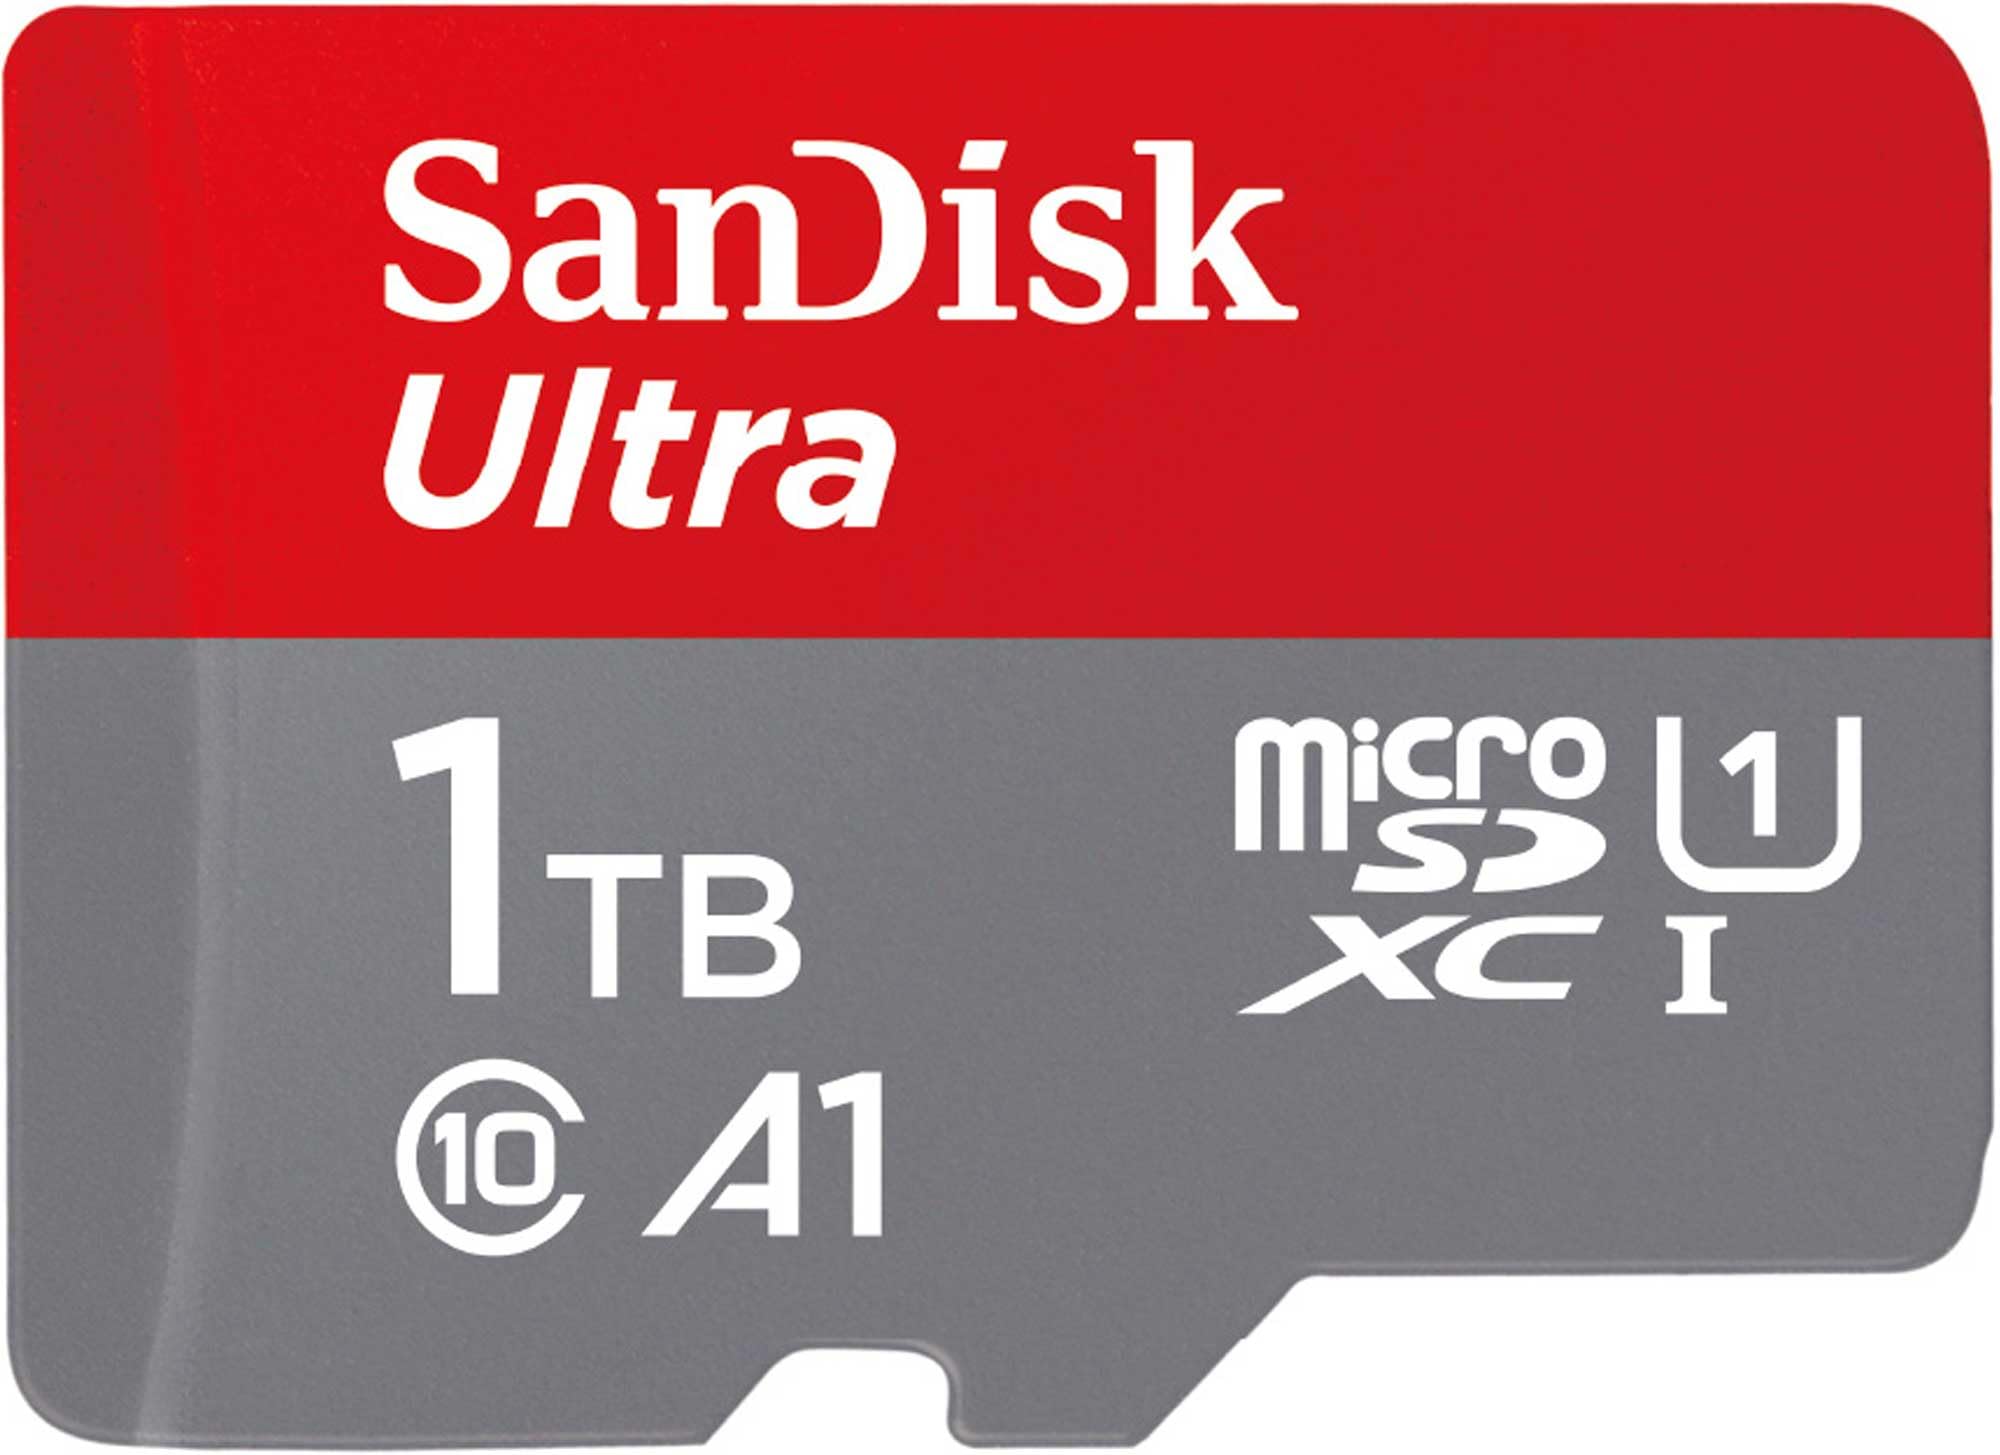 SanDisk サンディスク 正規品 microSDカード 1TB UHS-I Class10 10年間限定保証 SanDisk Ultra SDSQUAC-1T00-GH3MA 新パッケージ